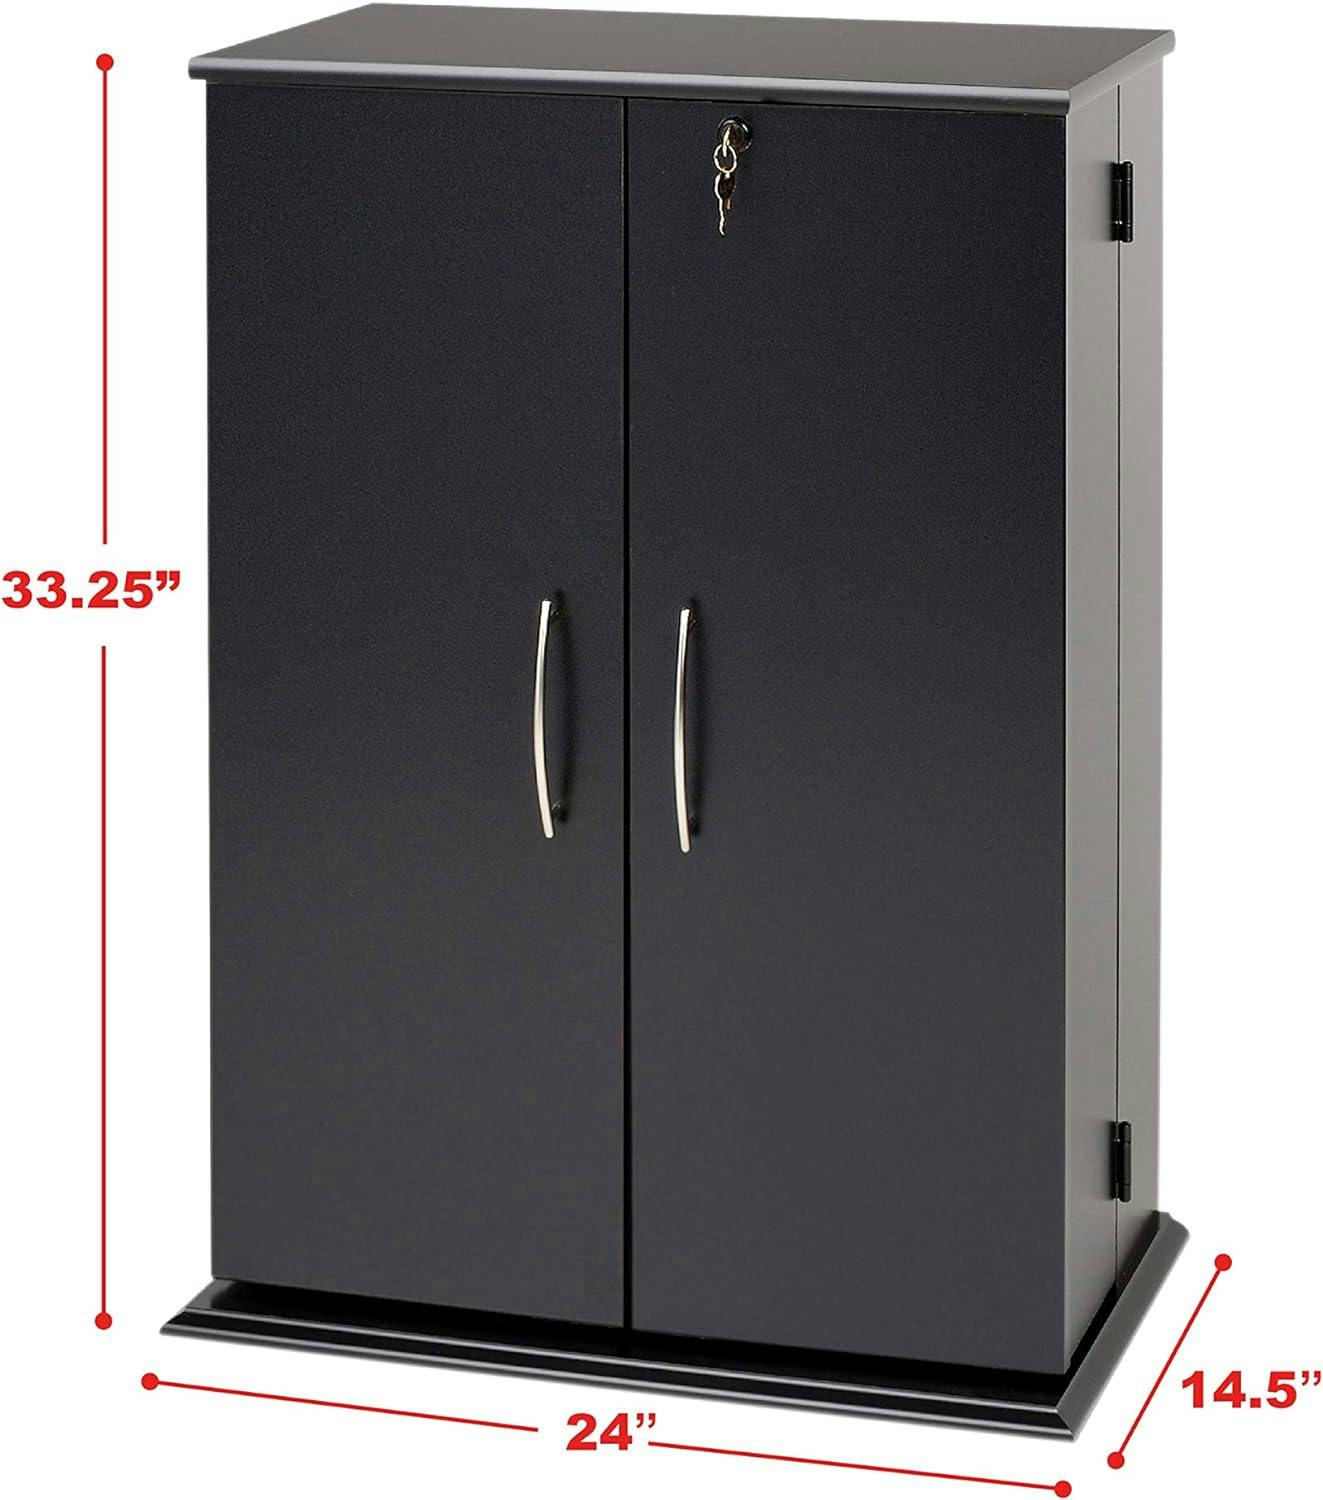 Adjustable Black Locking Media Storage Cabinet with Nickel Handles